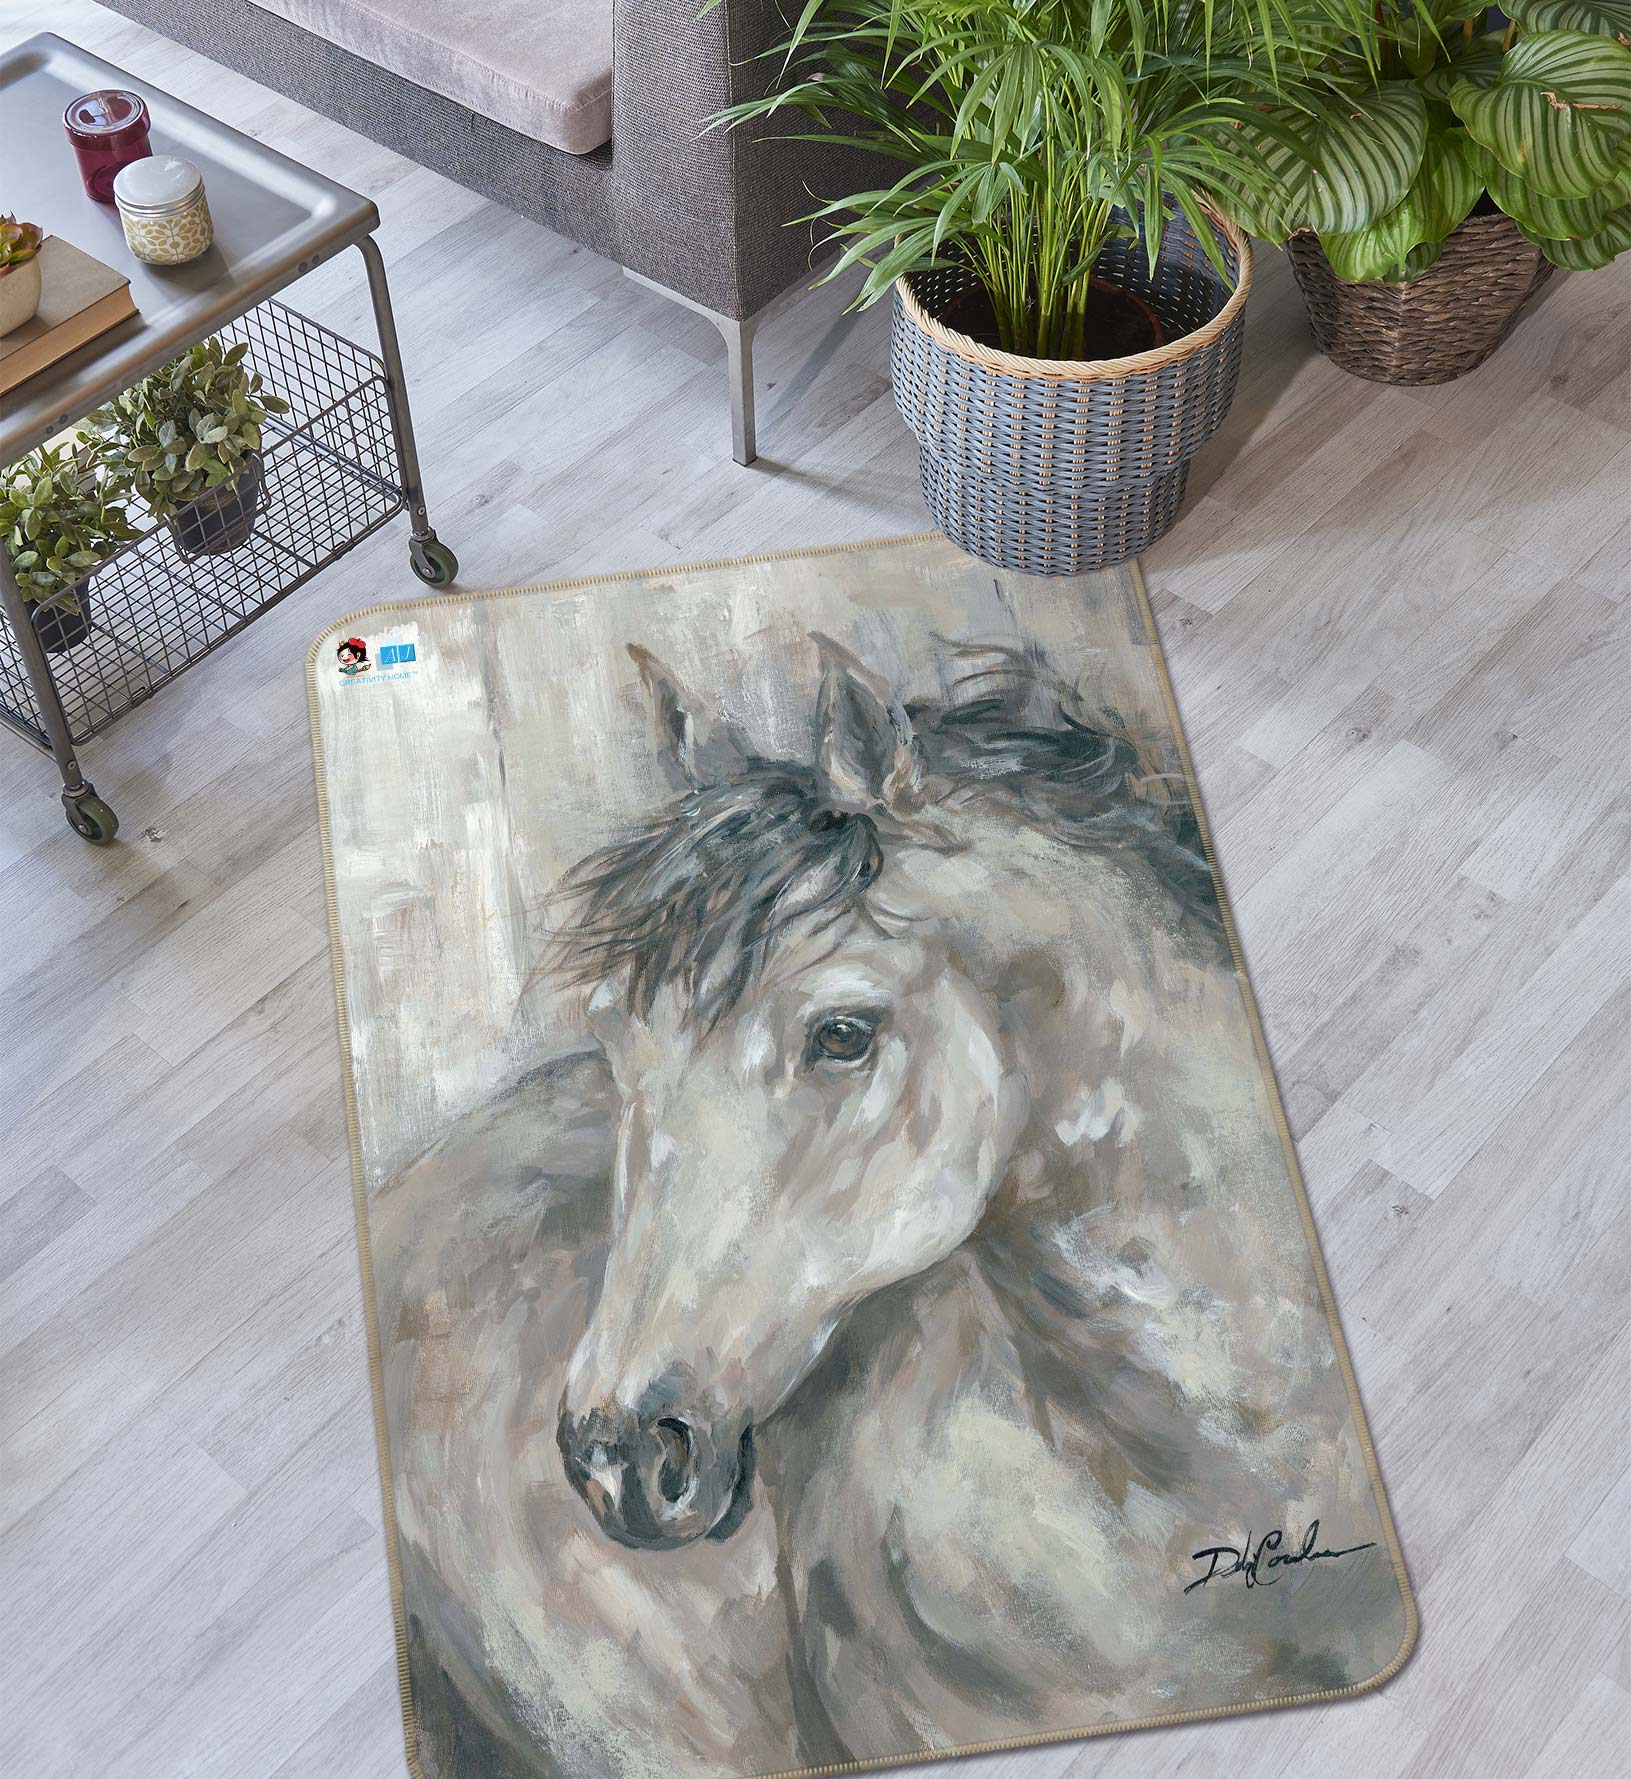 3D Horse Painting 1076 Debi Coules Rug Non Slip Rug Mat